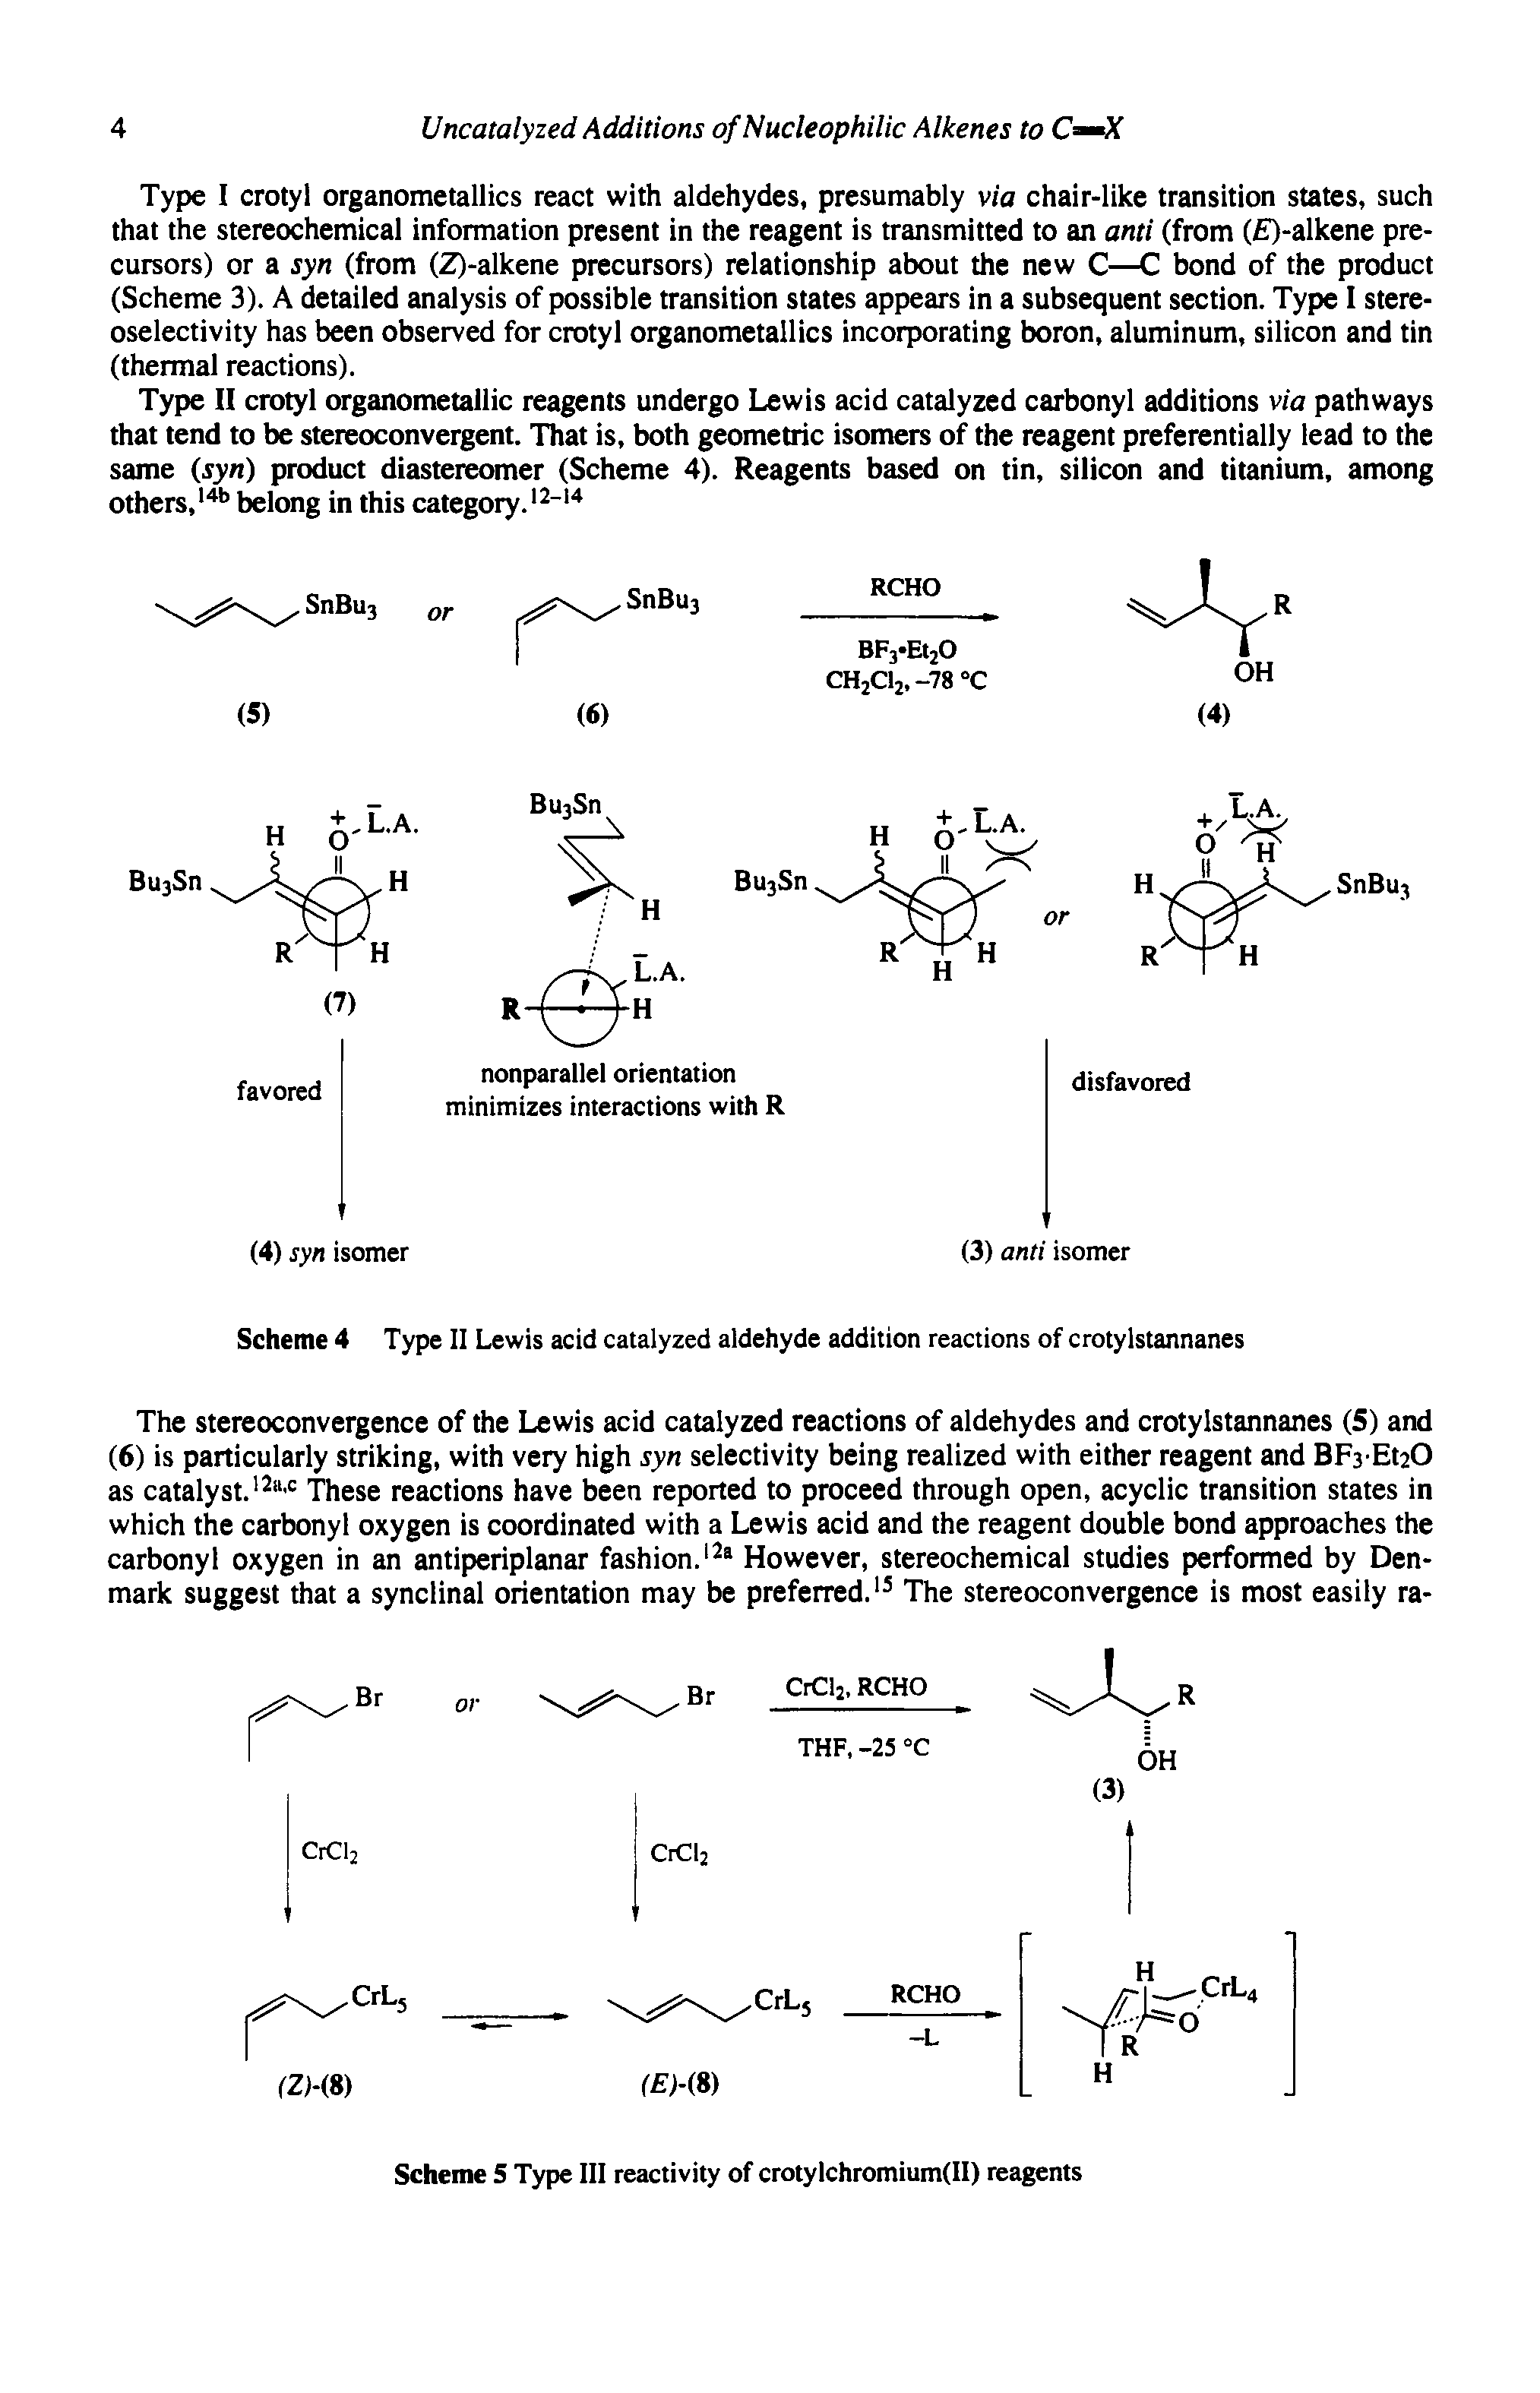 Scheme 4 Type II Lewis acid catalyzed aldehyde addition reactions of crotylstannanes...